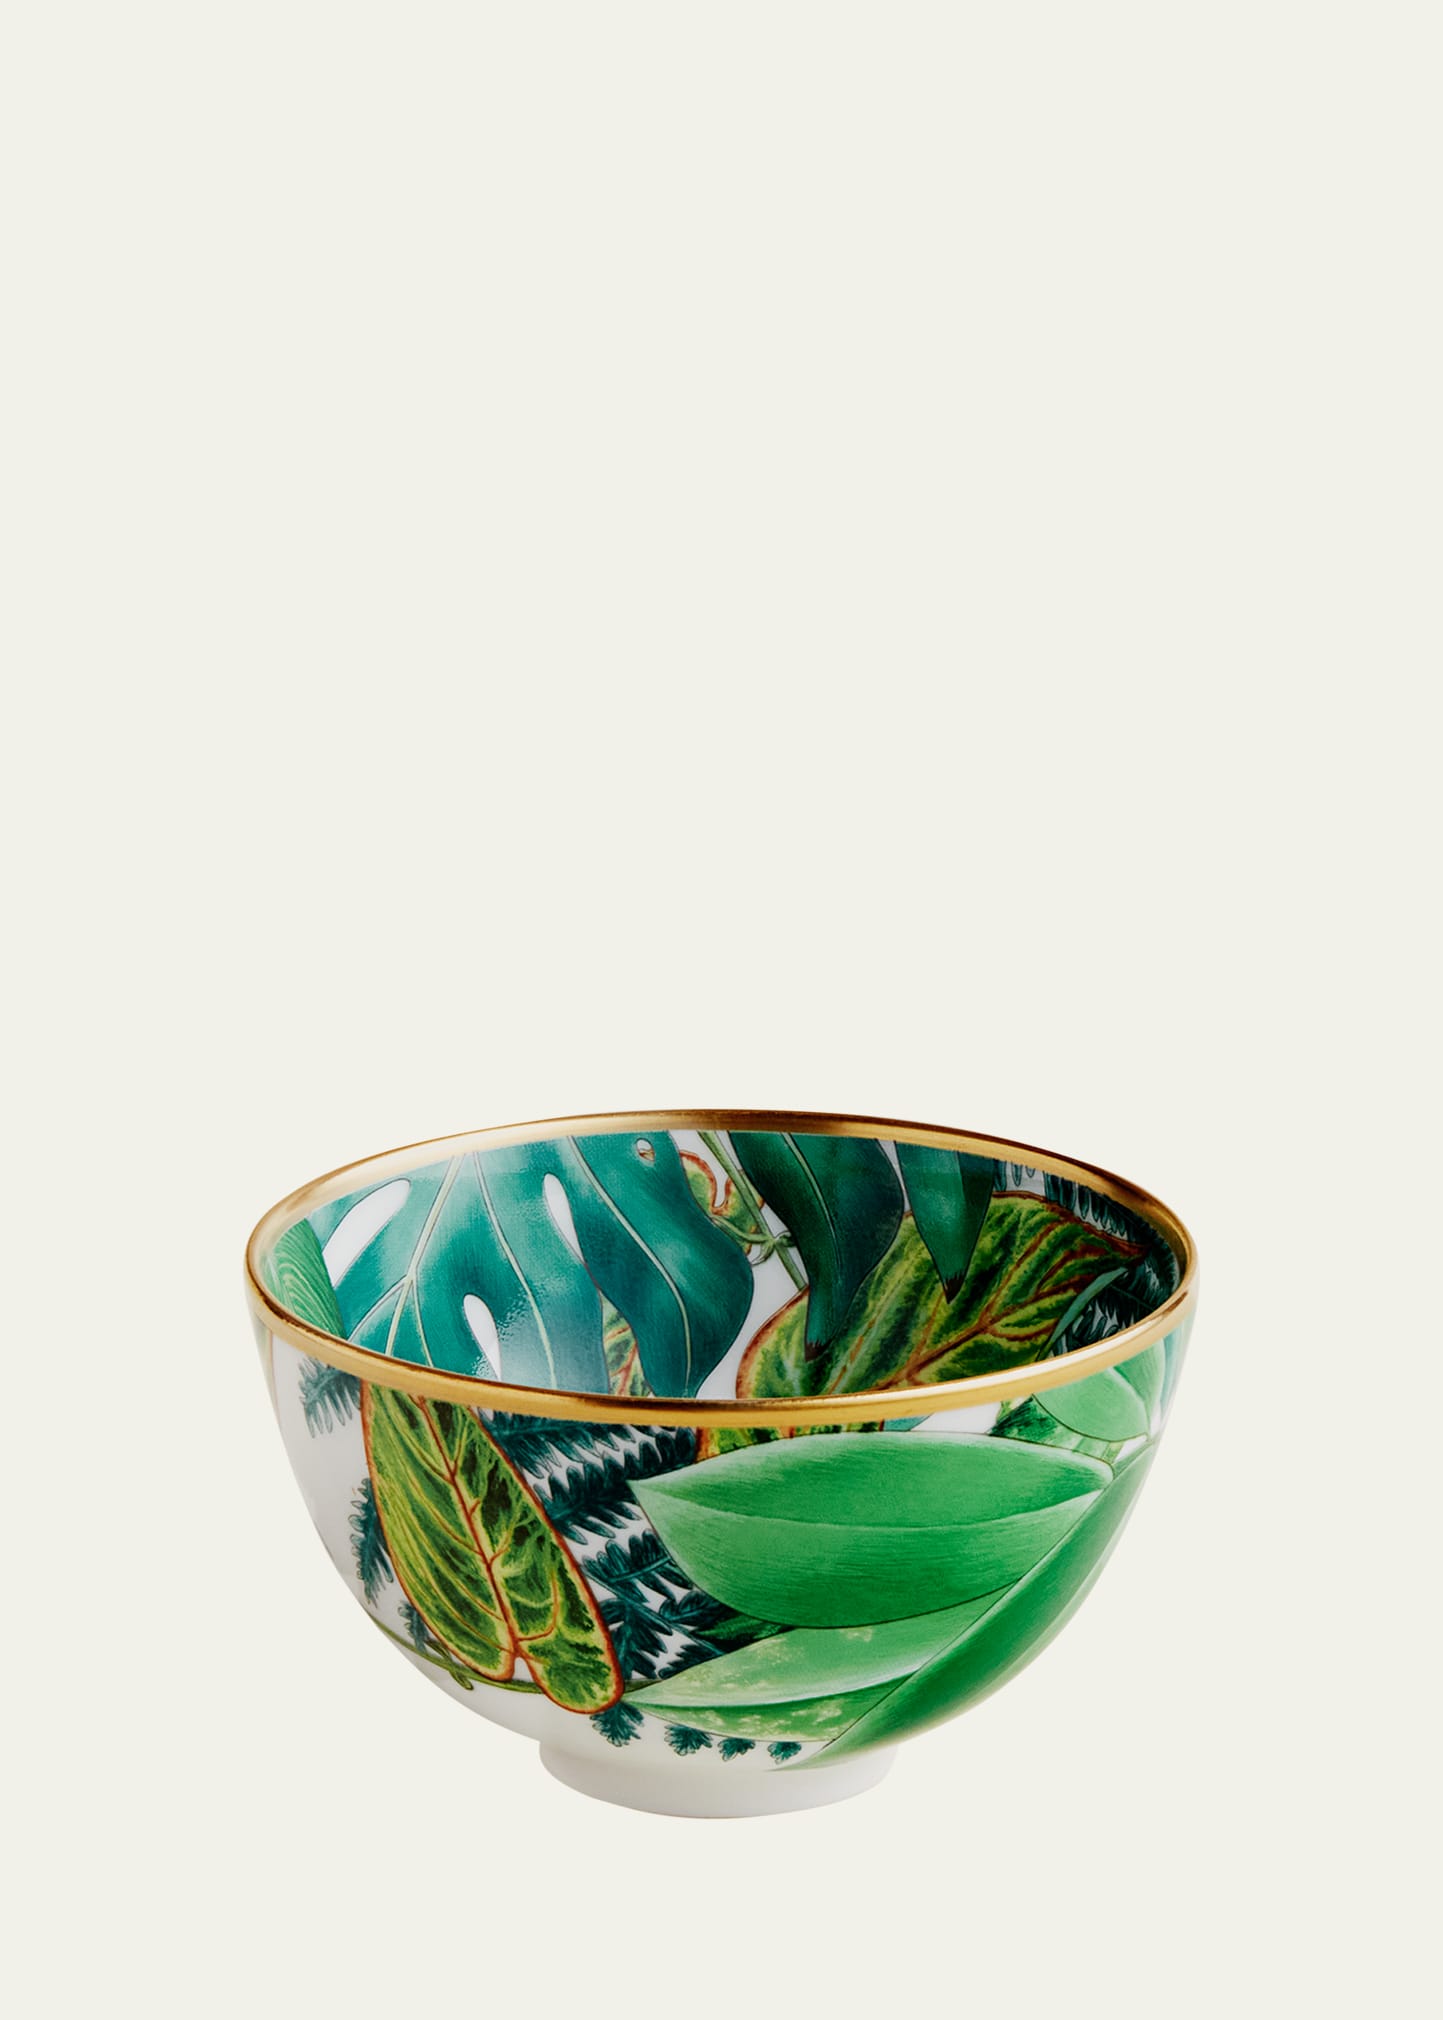 Hermès Passifolia Small Bowl, 7.4 oz.